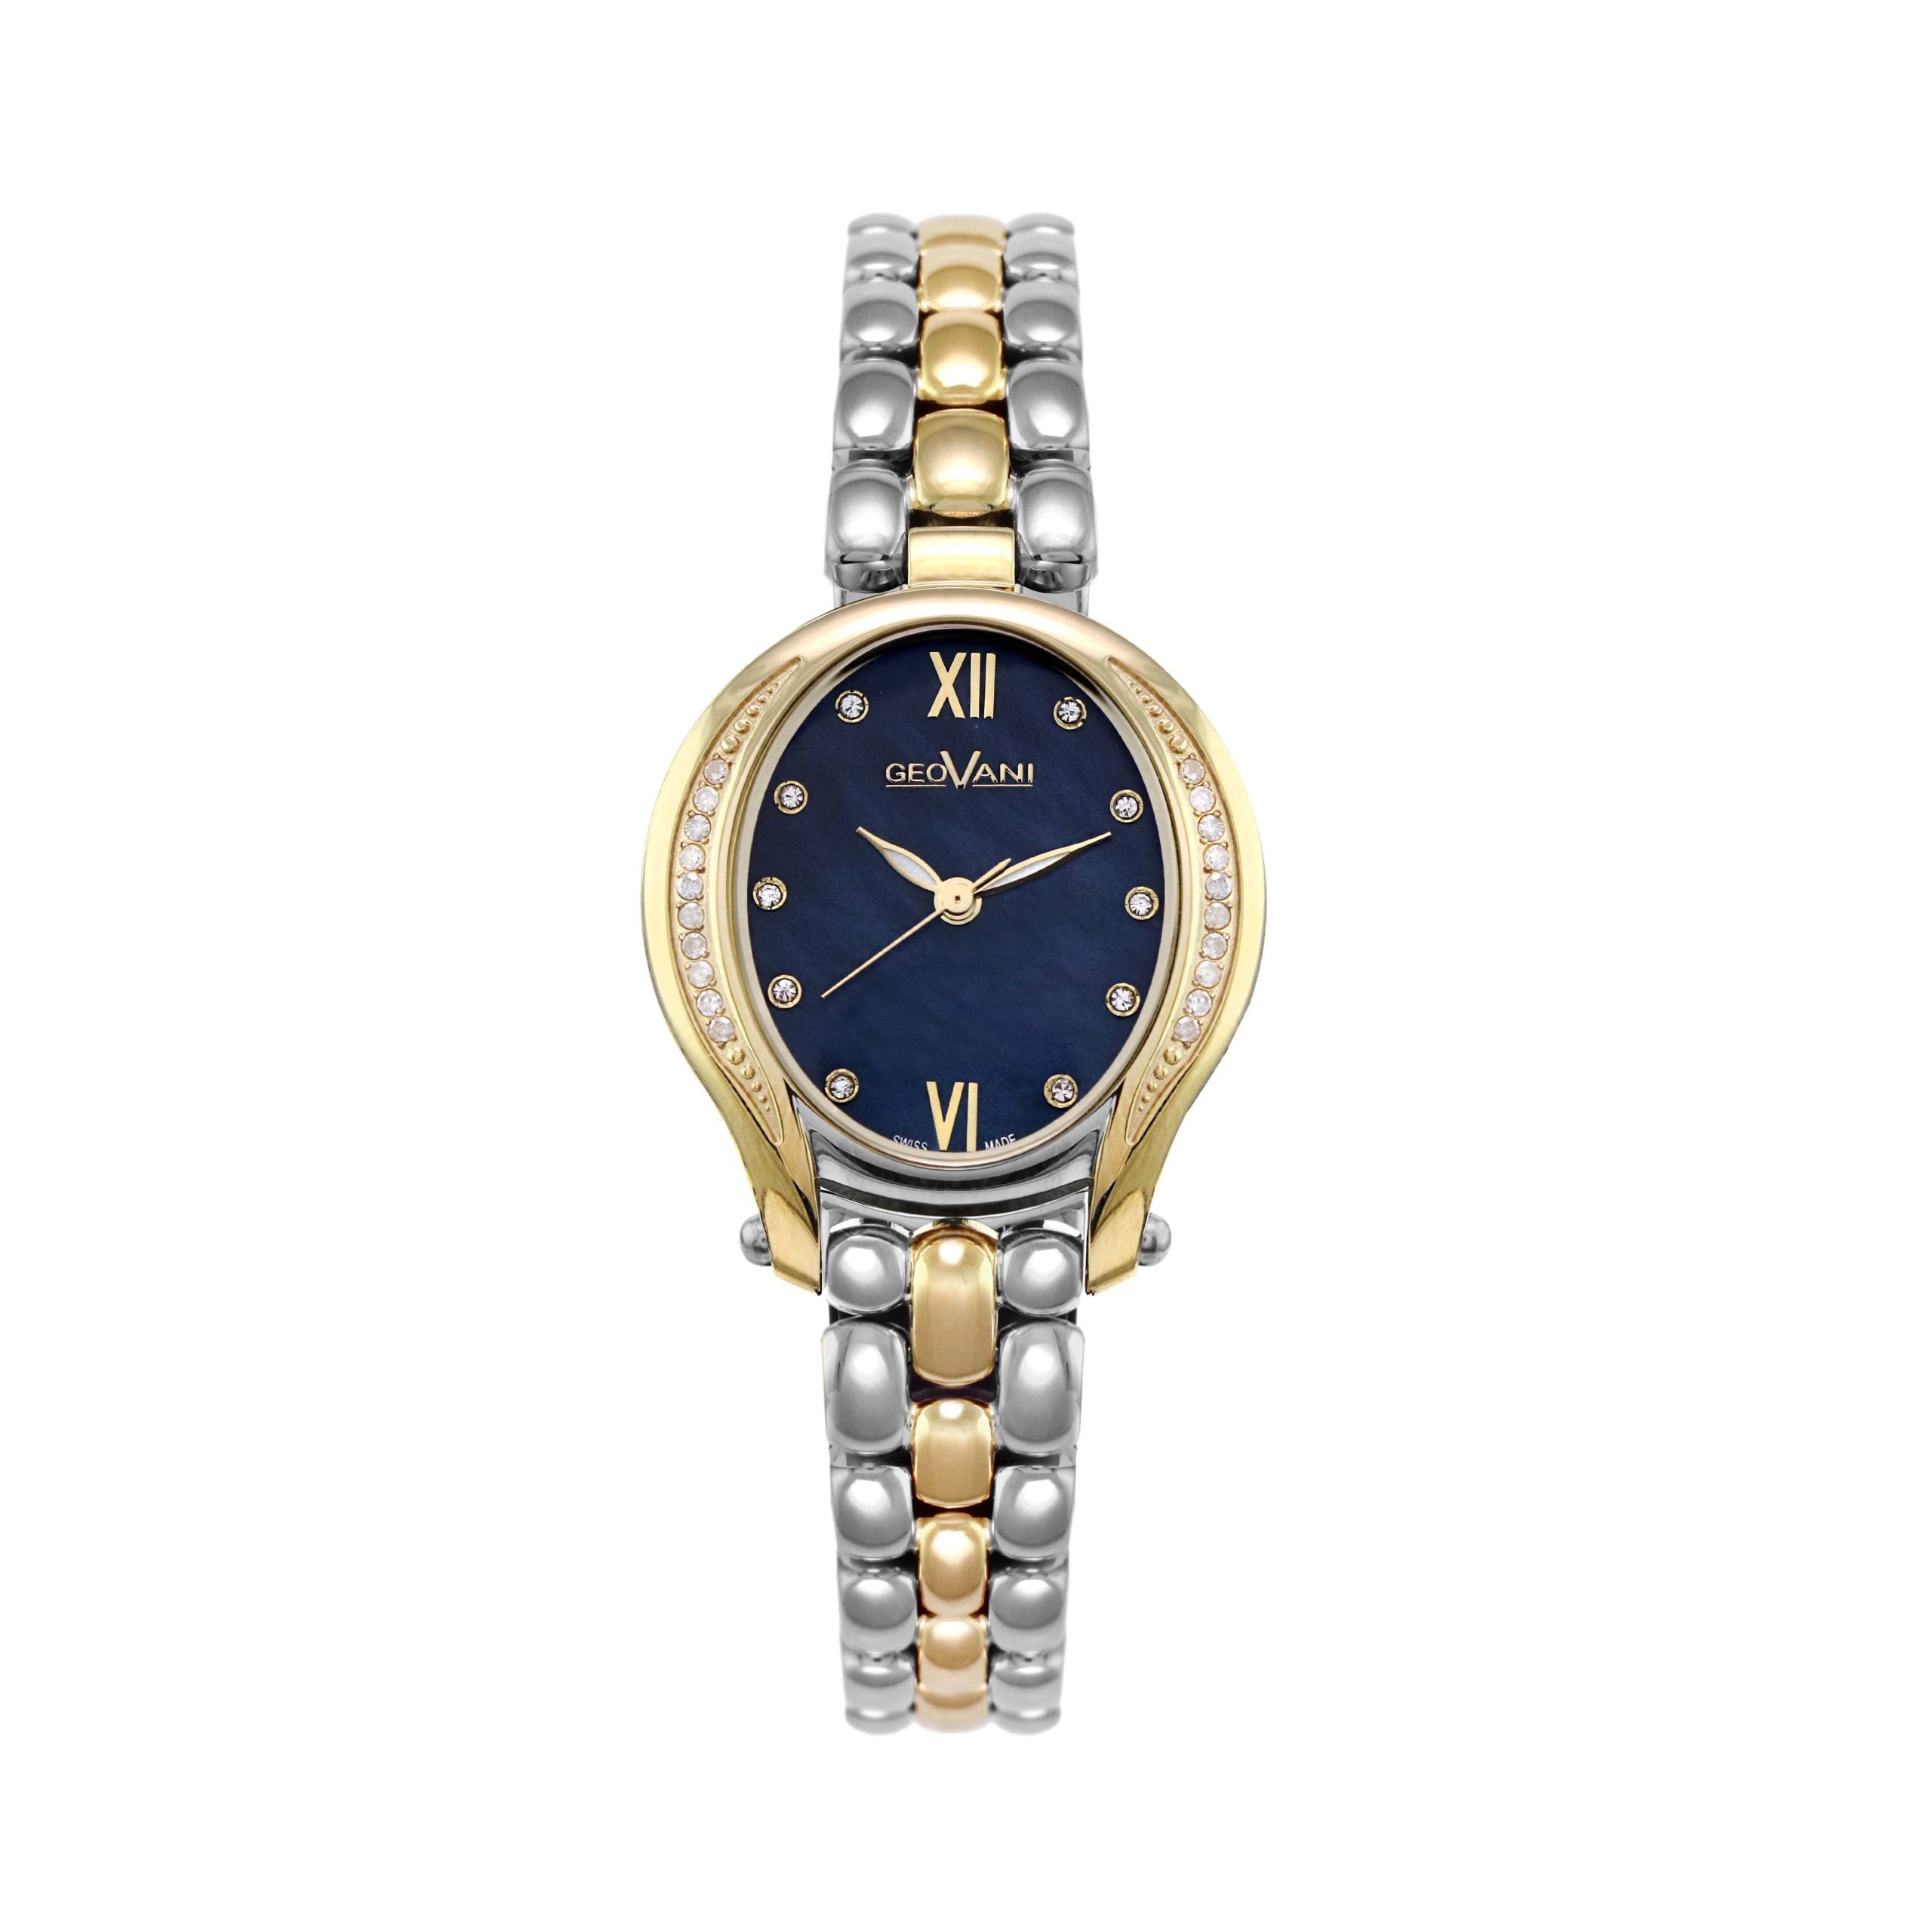 Giovanni Women's Swiss Quartz Watch with Pearl Blue Dial - GEO-0018